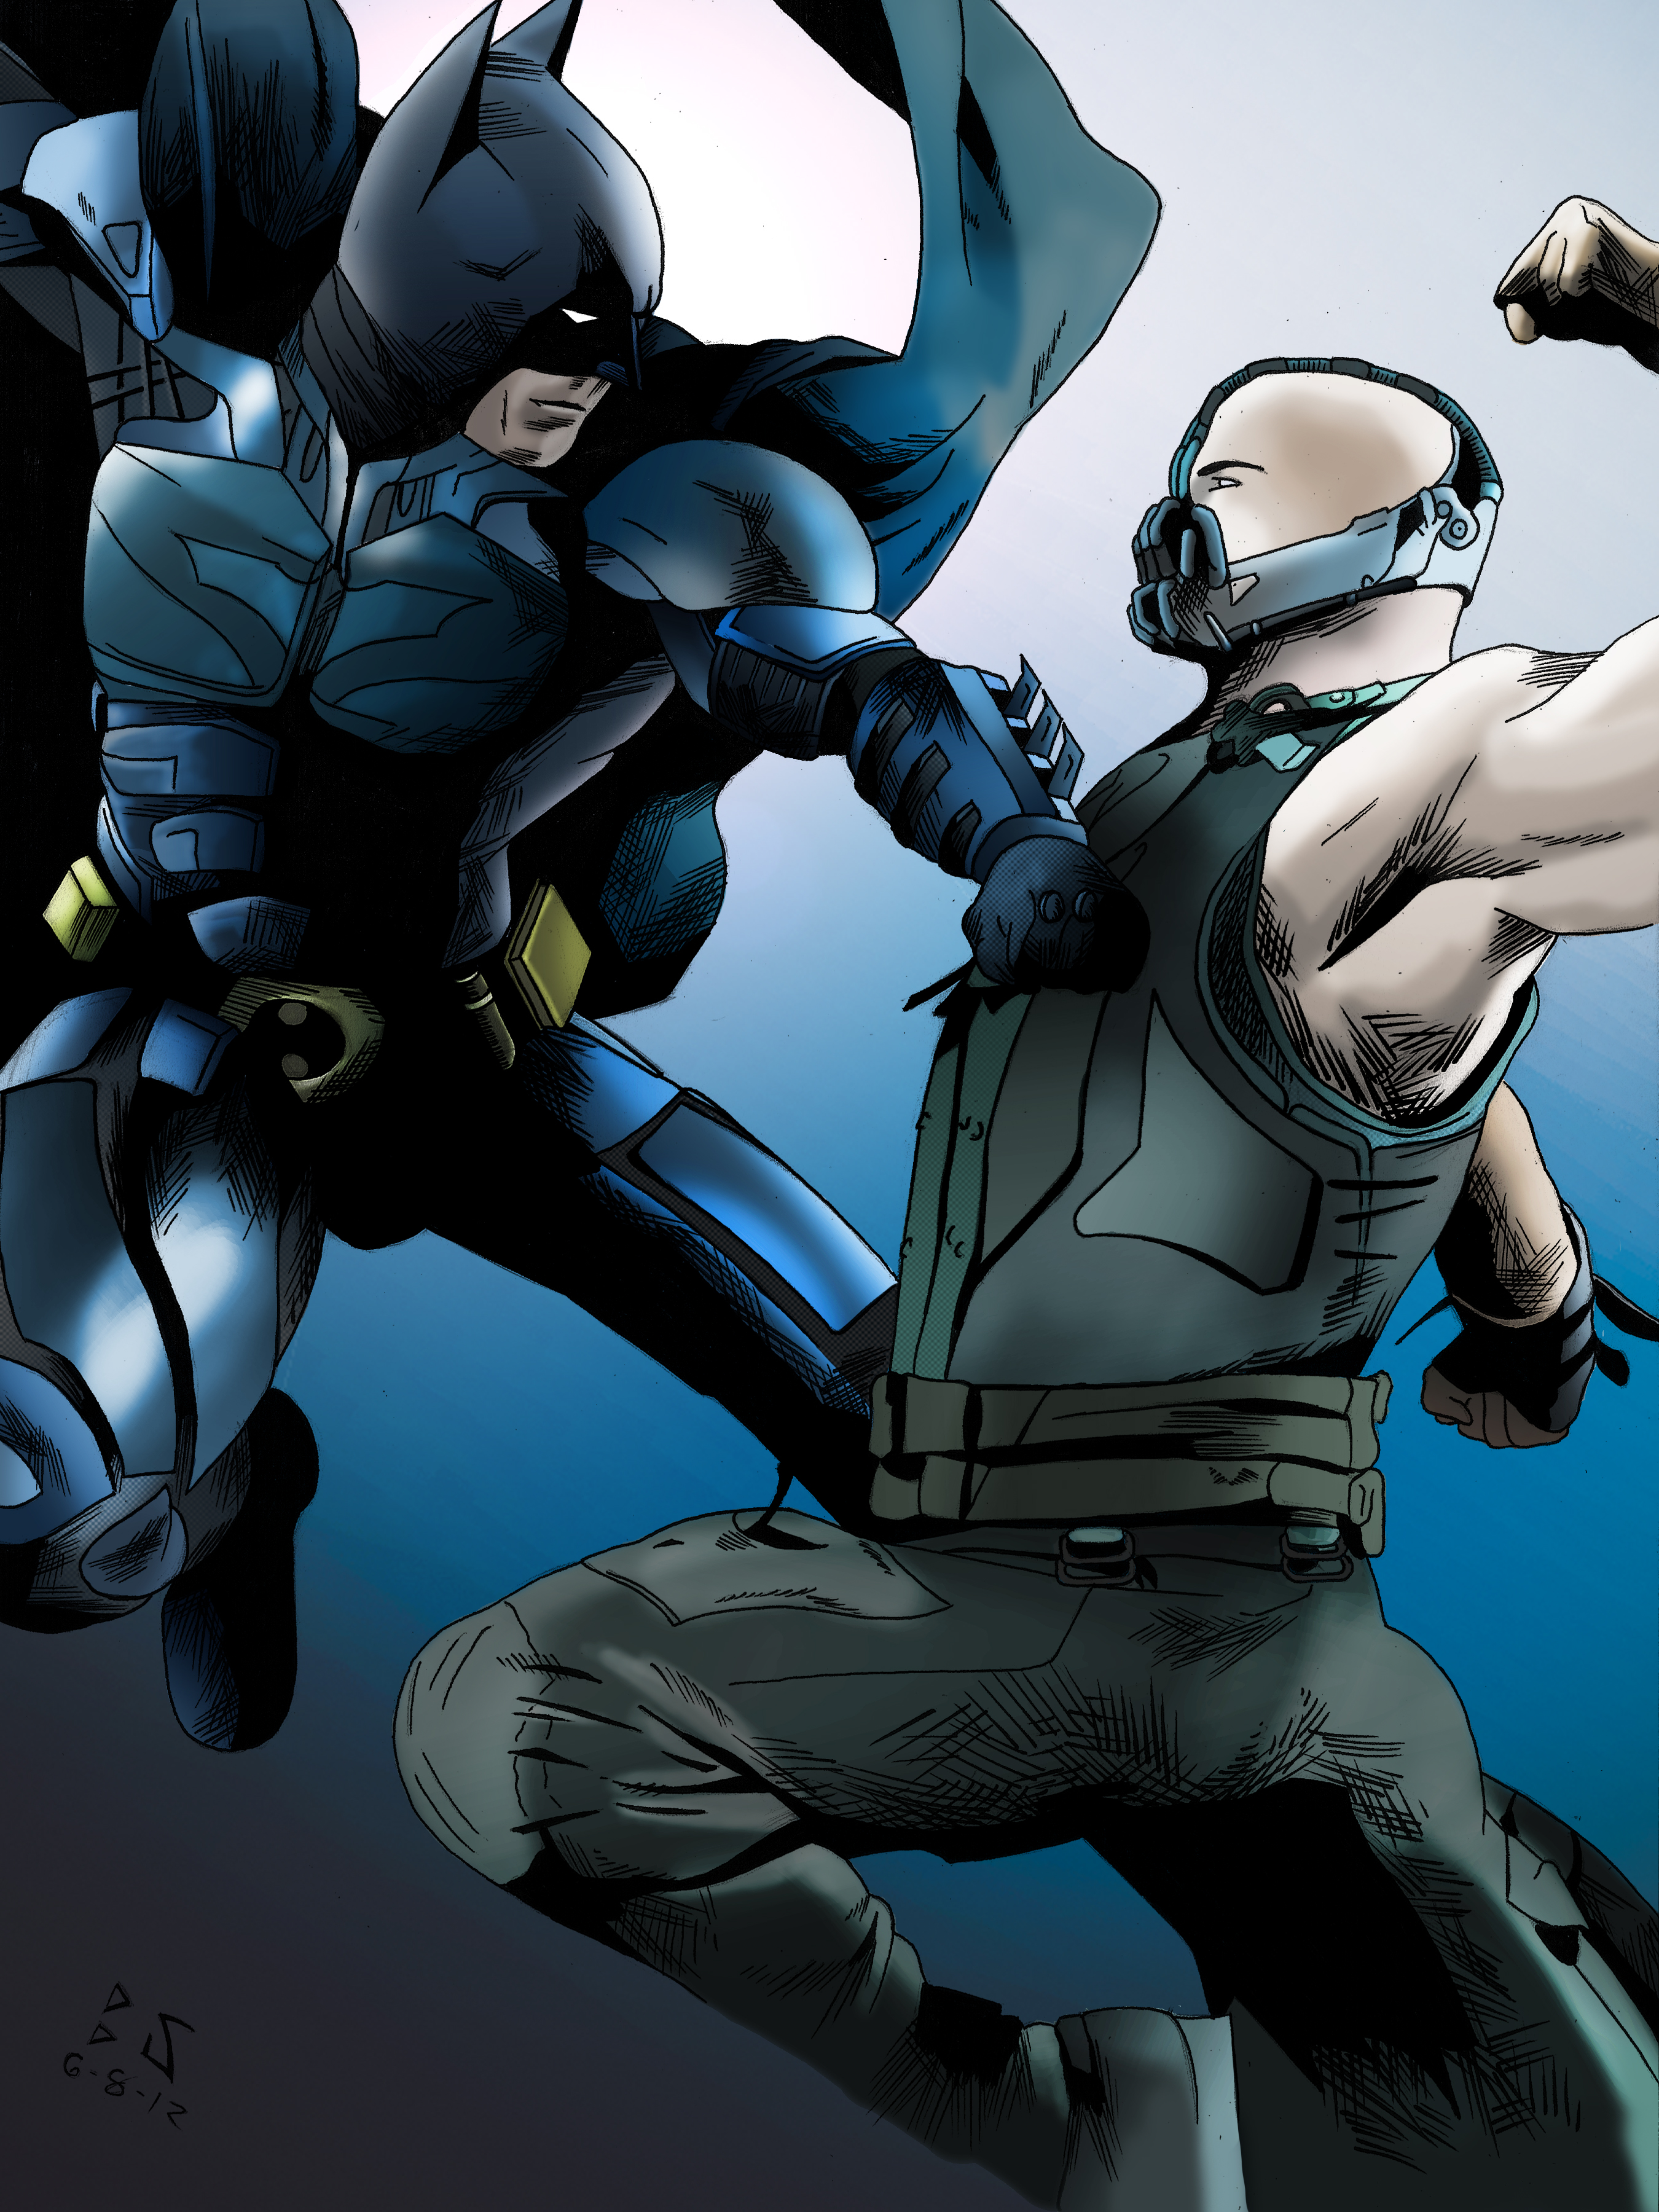 Batman vs Bane Color by whitekidz on DeviantArt